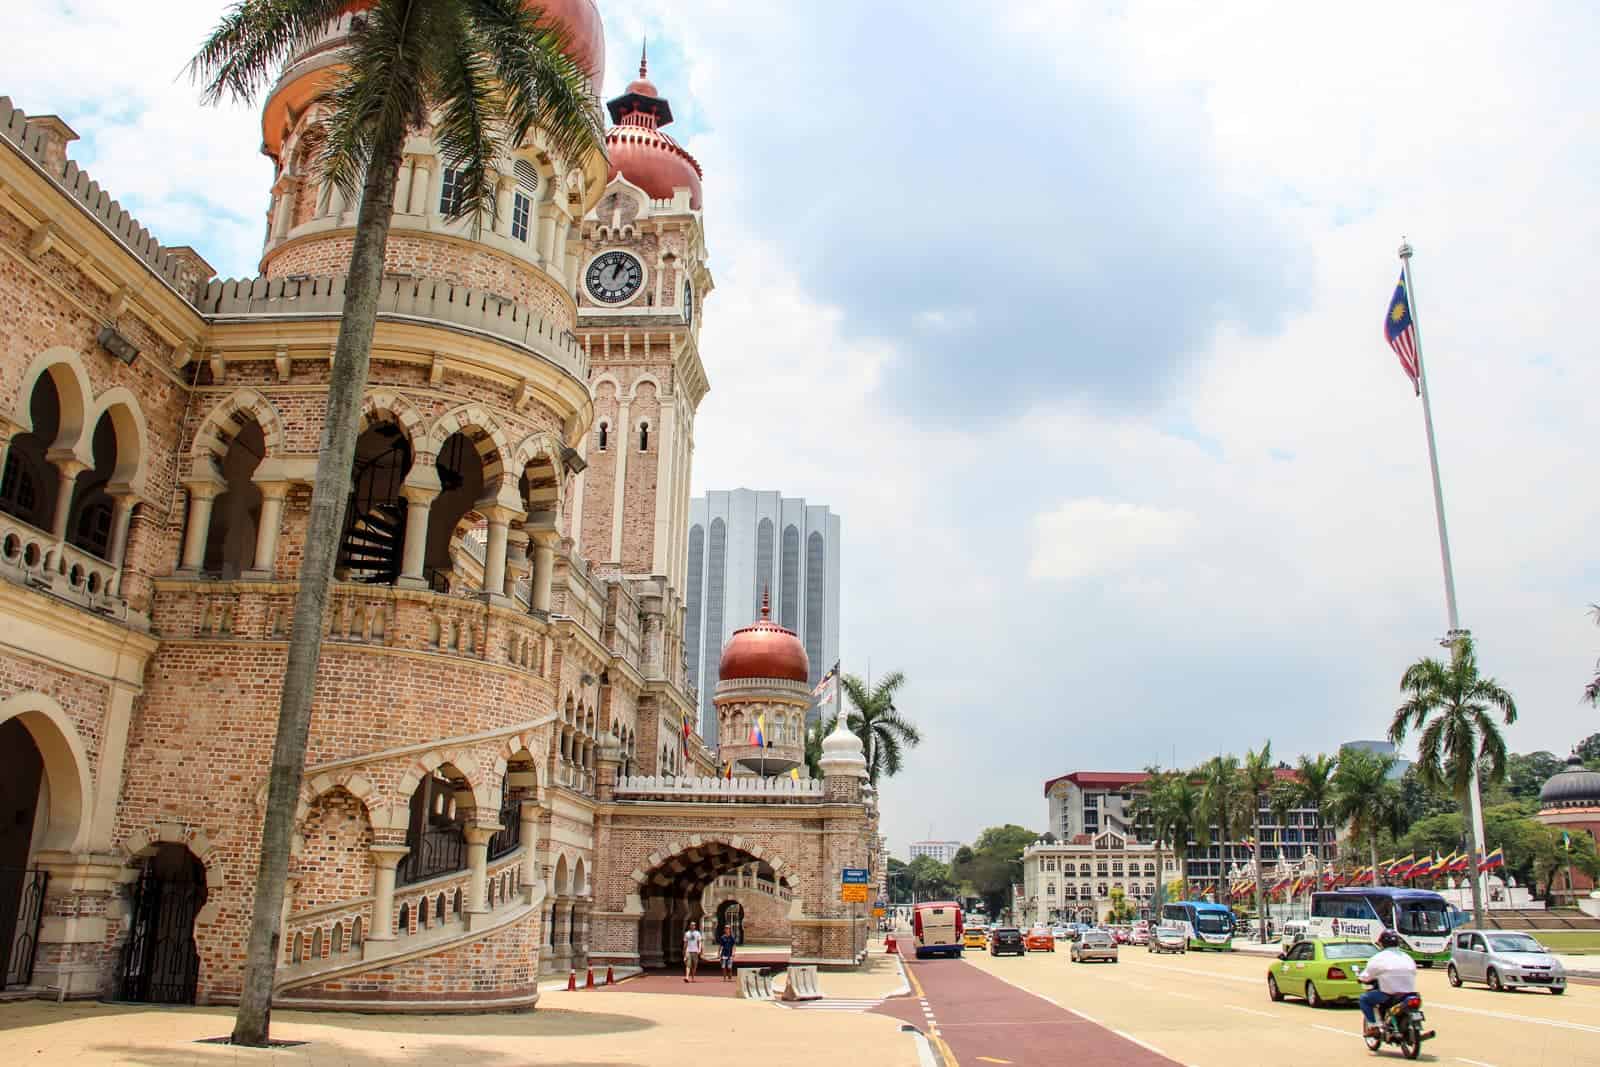 Buildings of Merdeka Independence Square in Kuala Lumpur, Malaysia